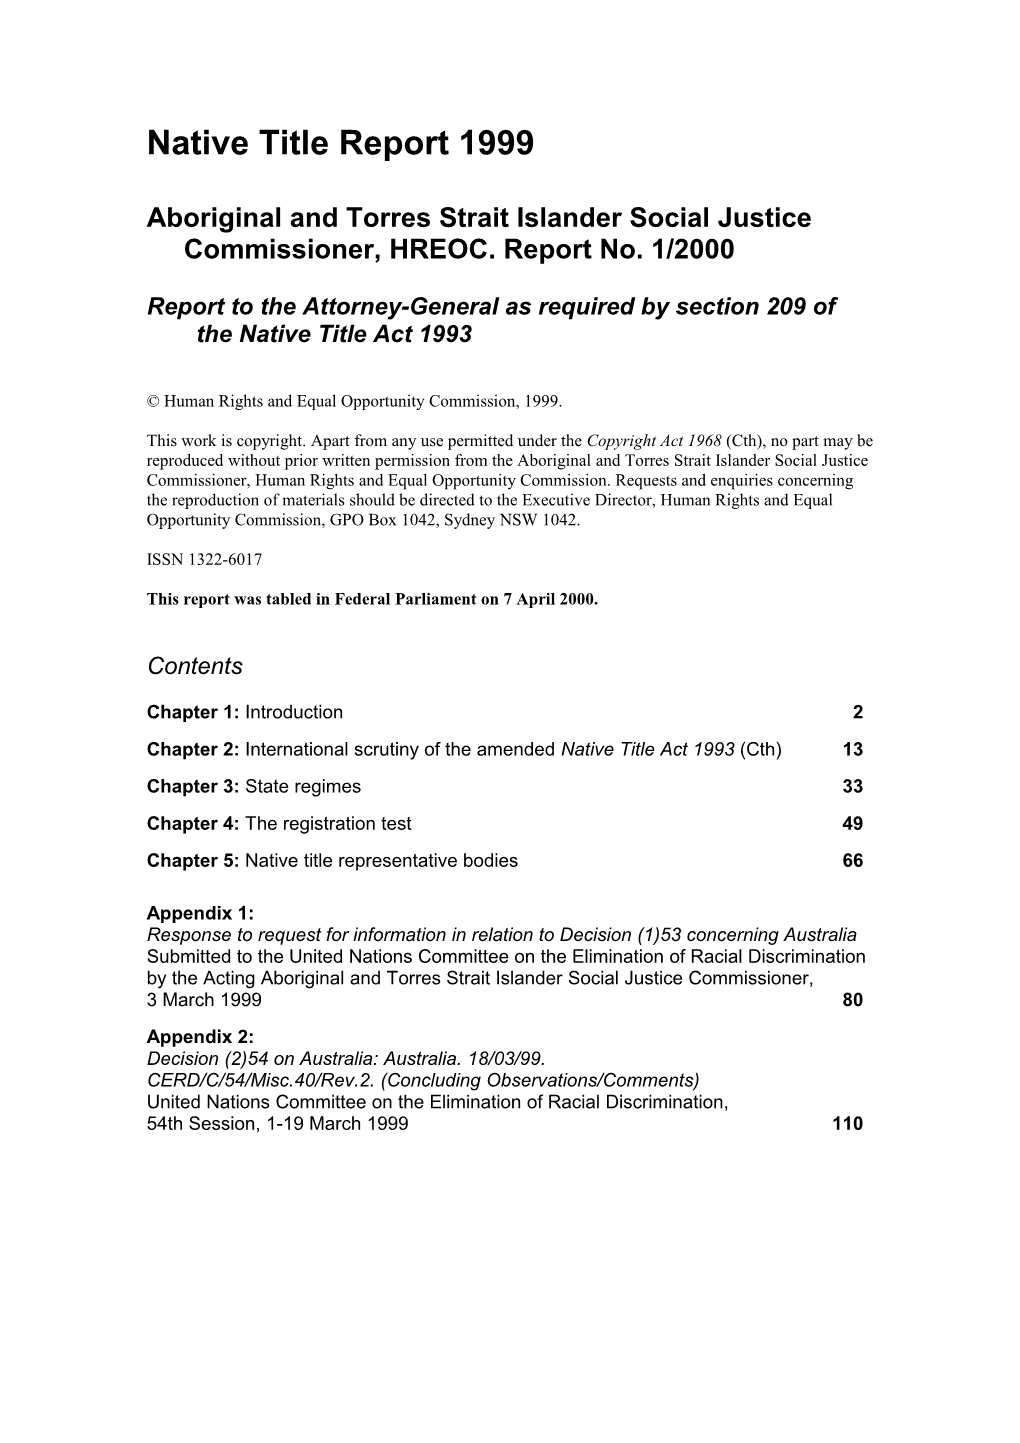 Aboriginal and Torres Strait Islander Social Justice Commissioner, HREOC. Report No. 1/2000